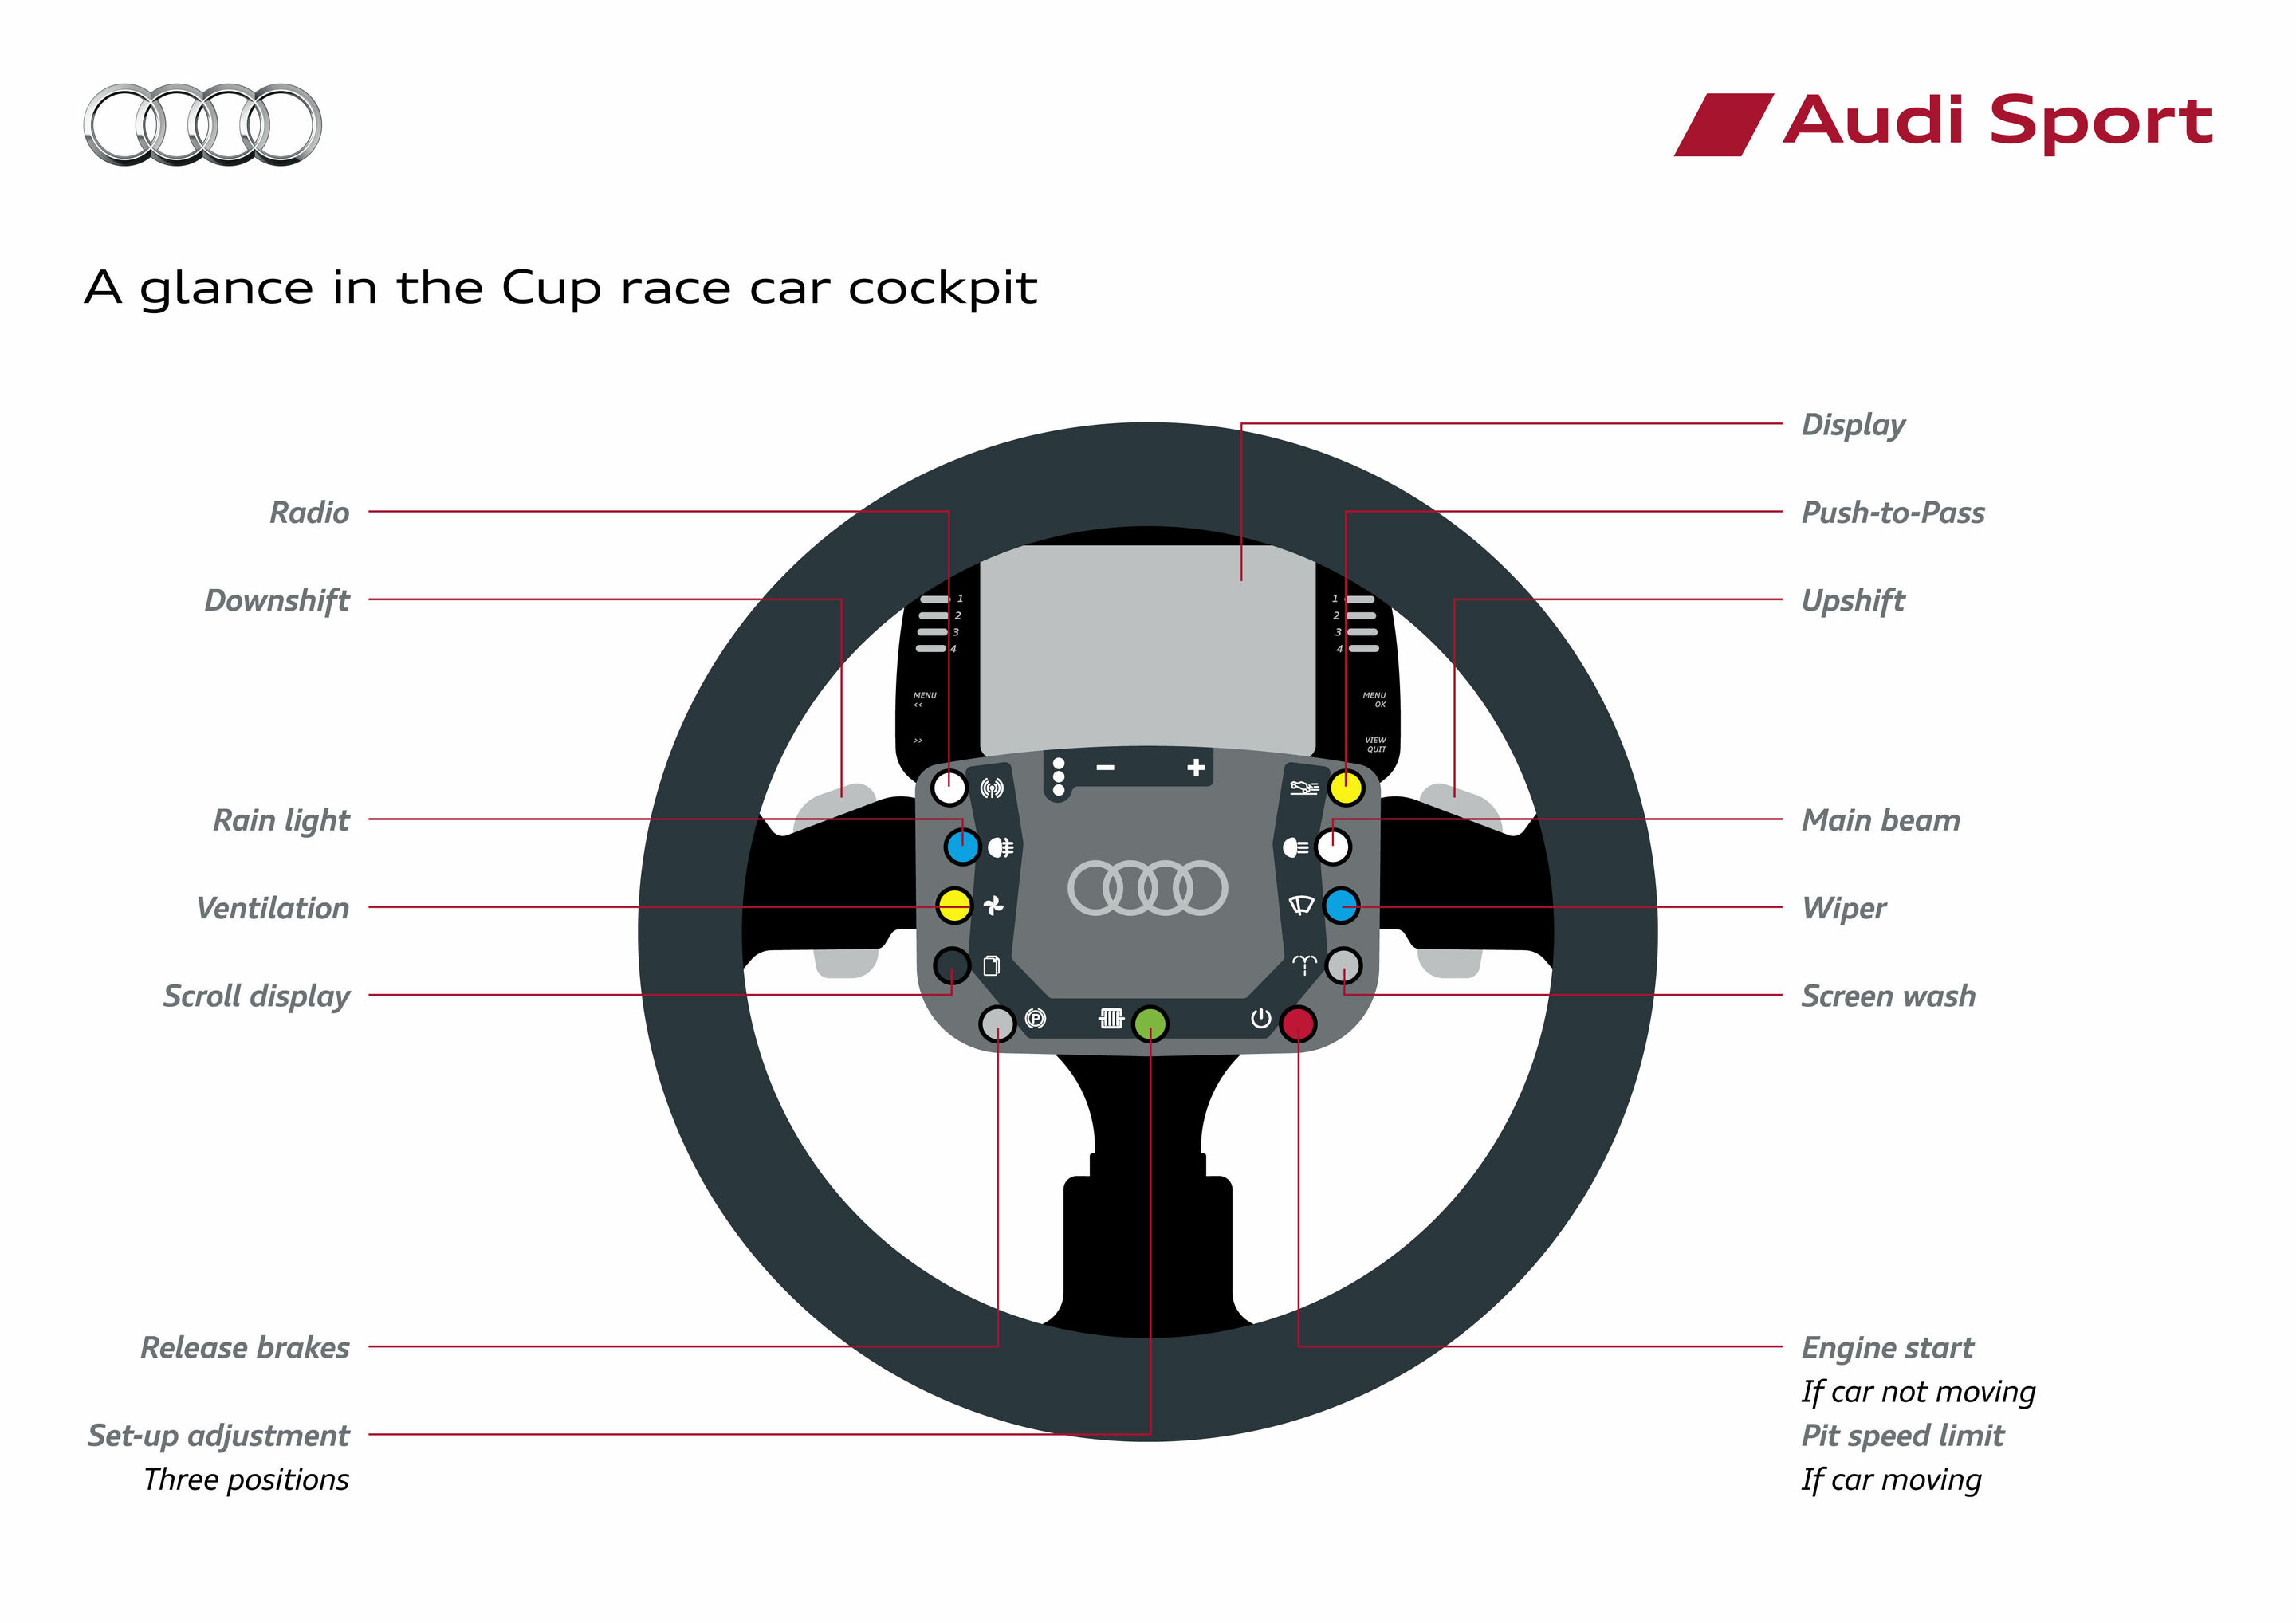 Audi Sport TT Cup 2015